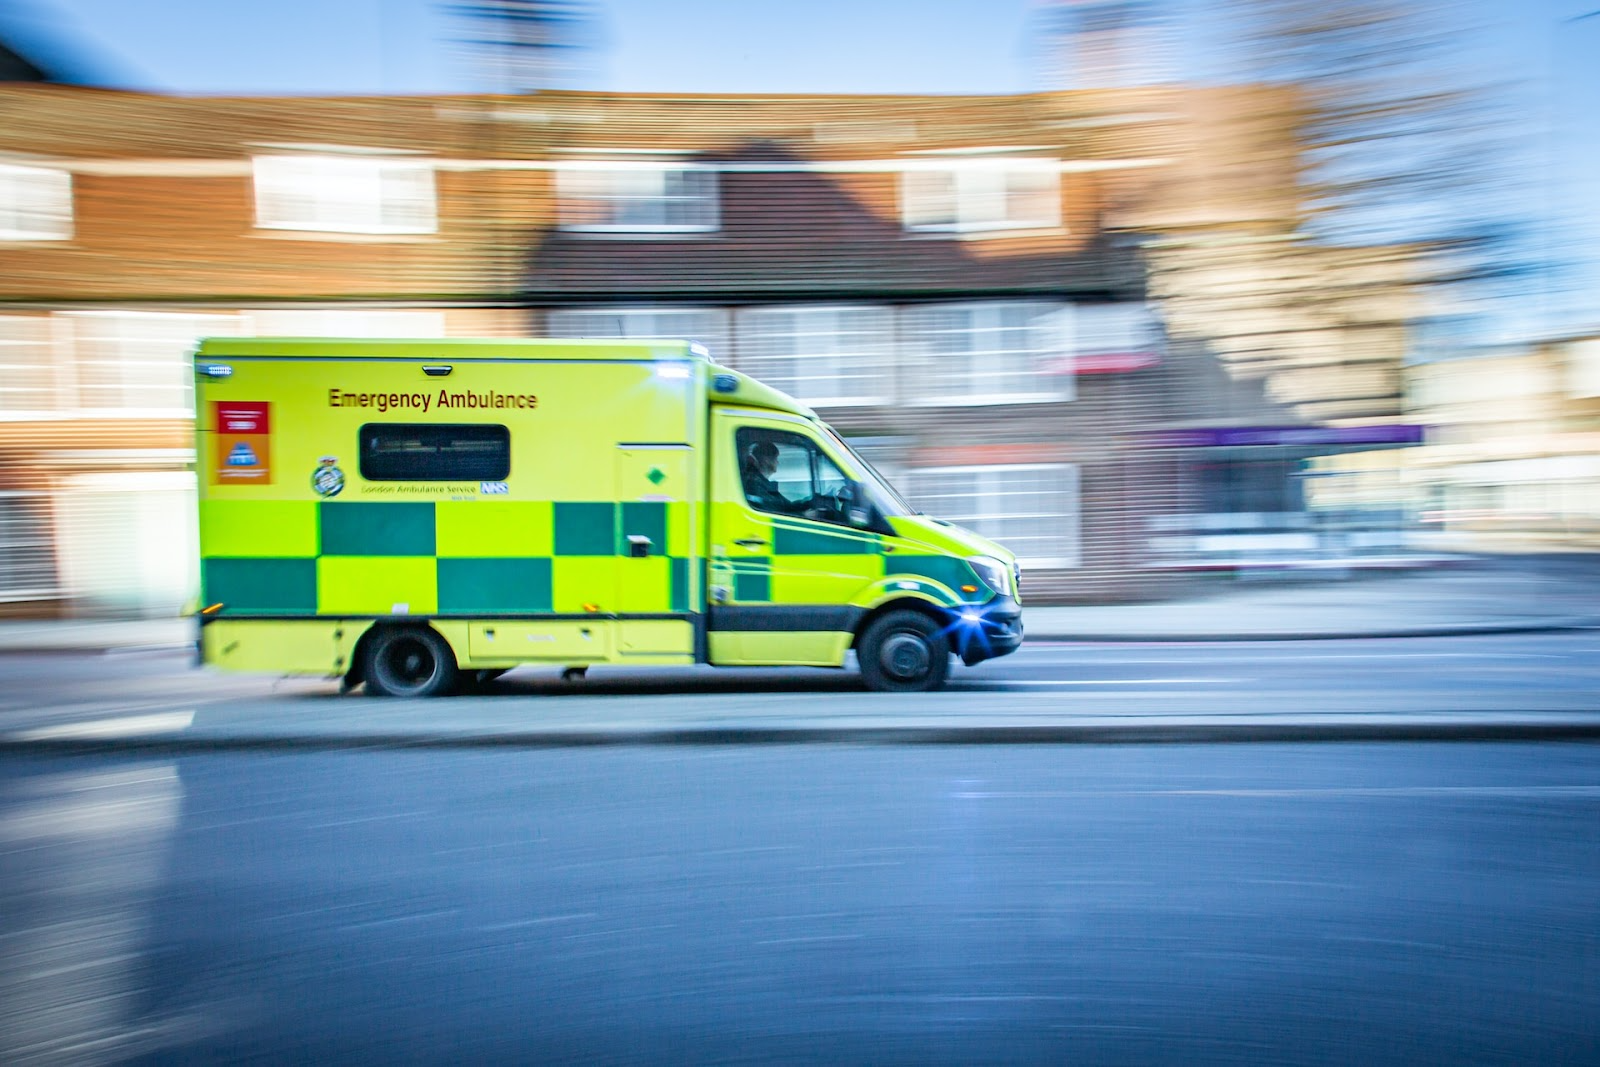 An ambulance rushing through a street